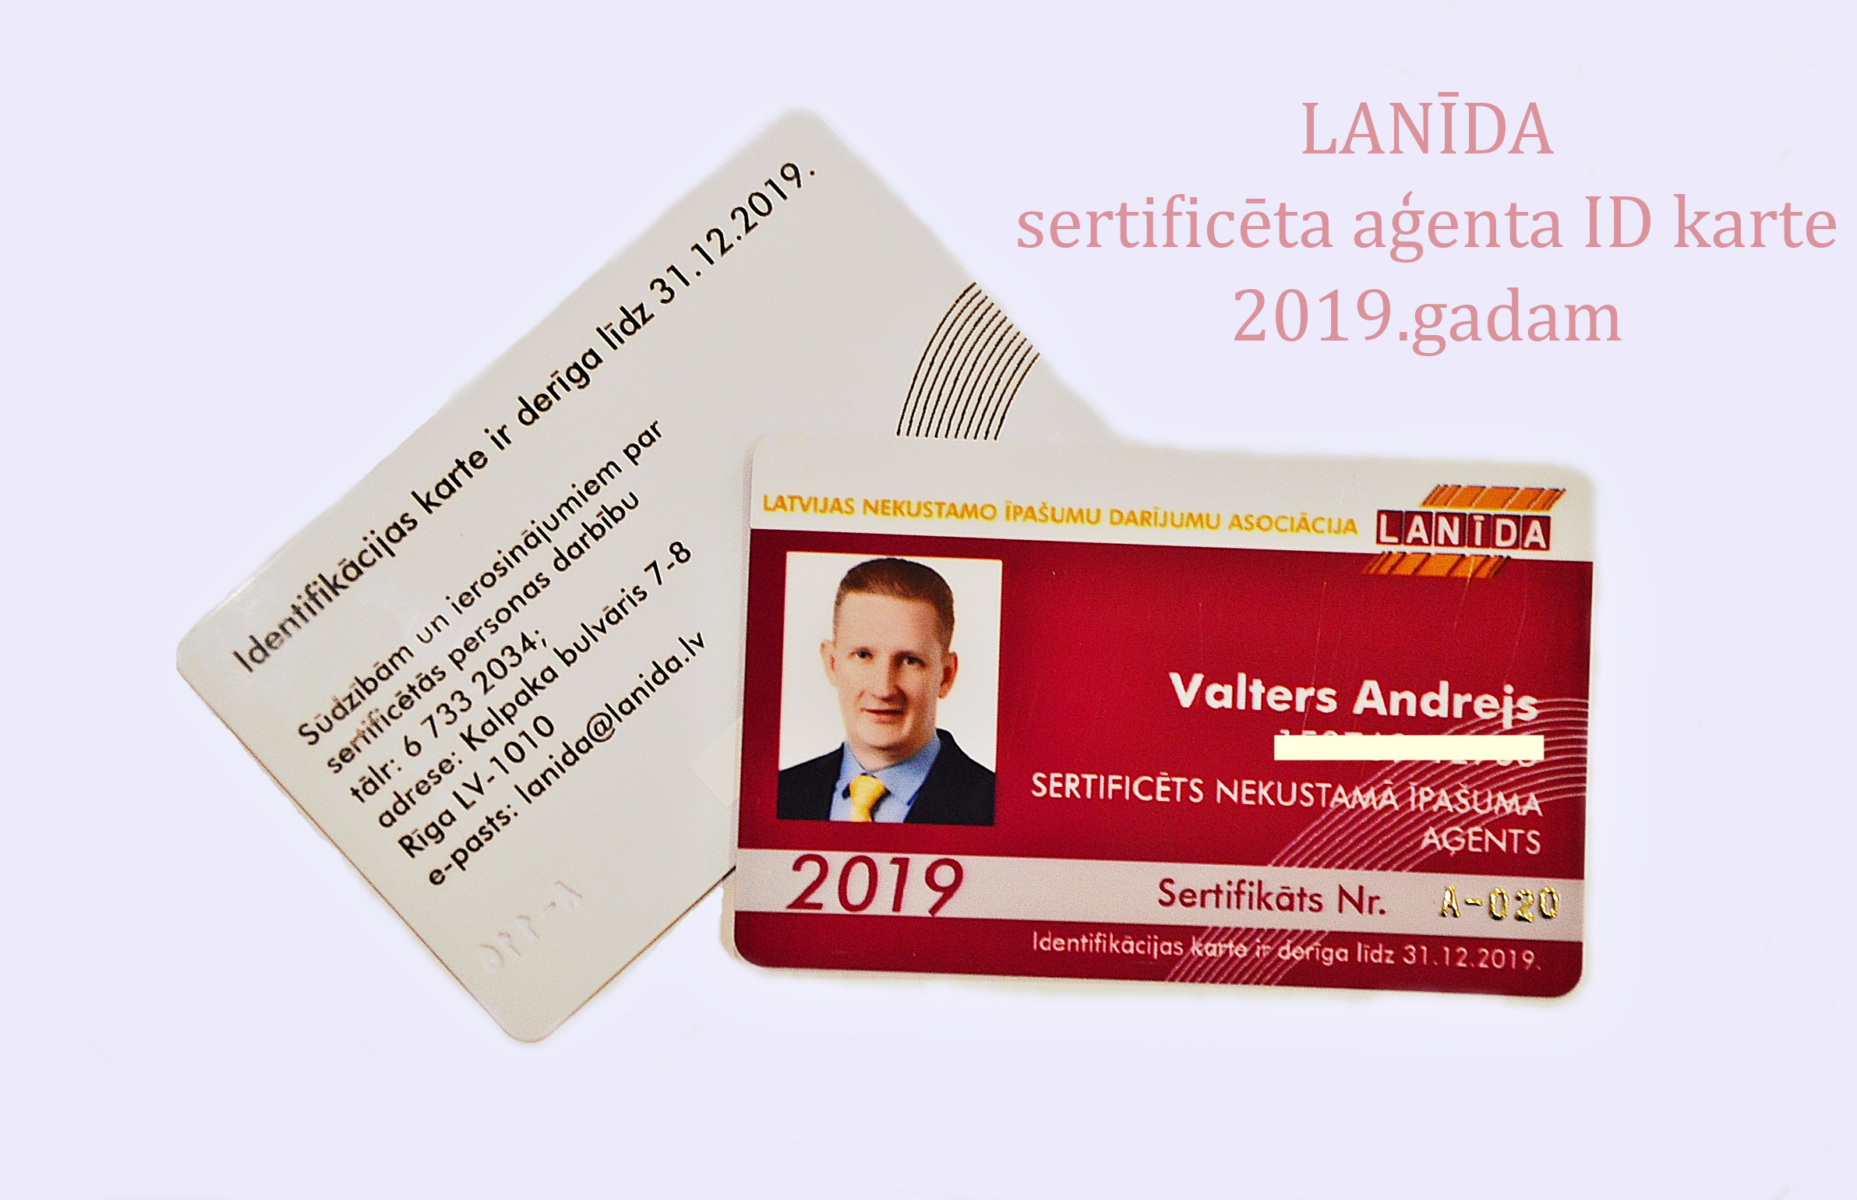 LANĪDA sertificēta aģenta ID karte